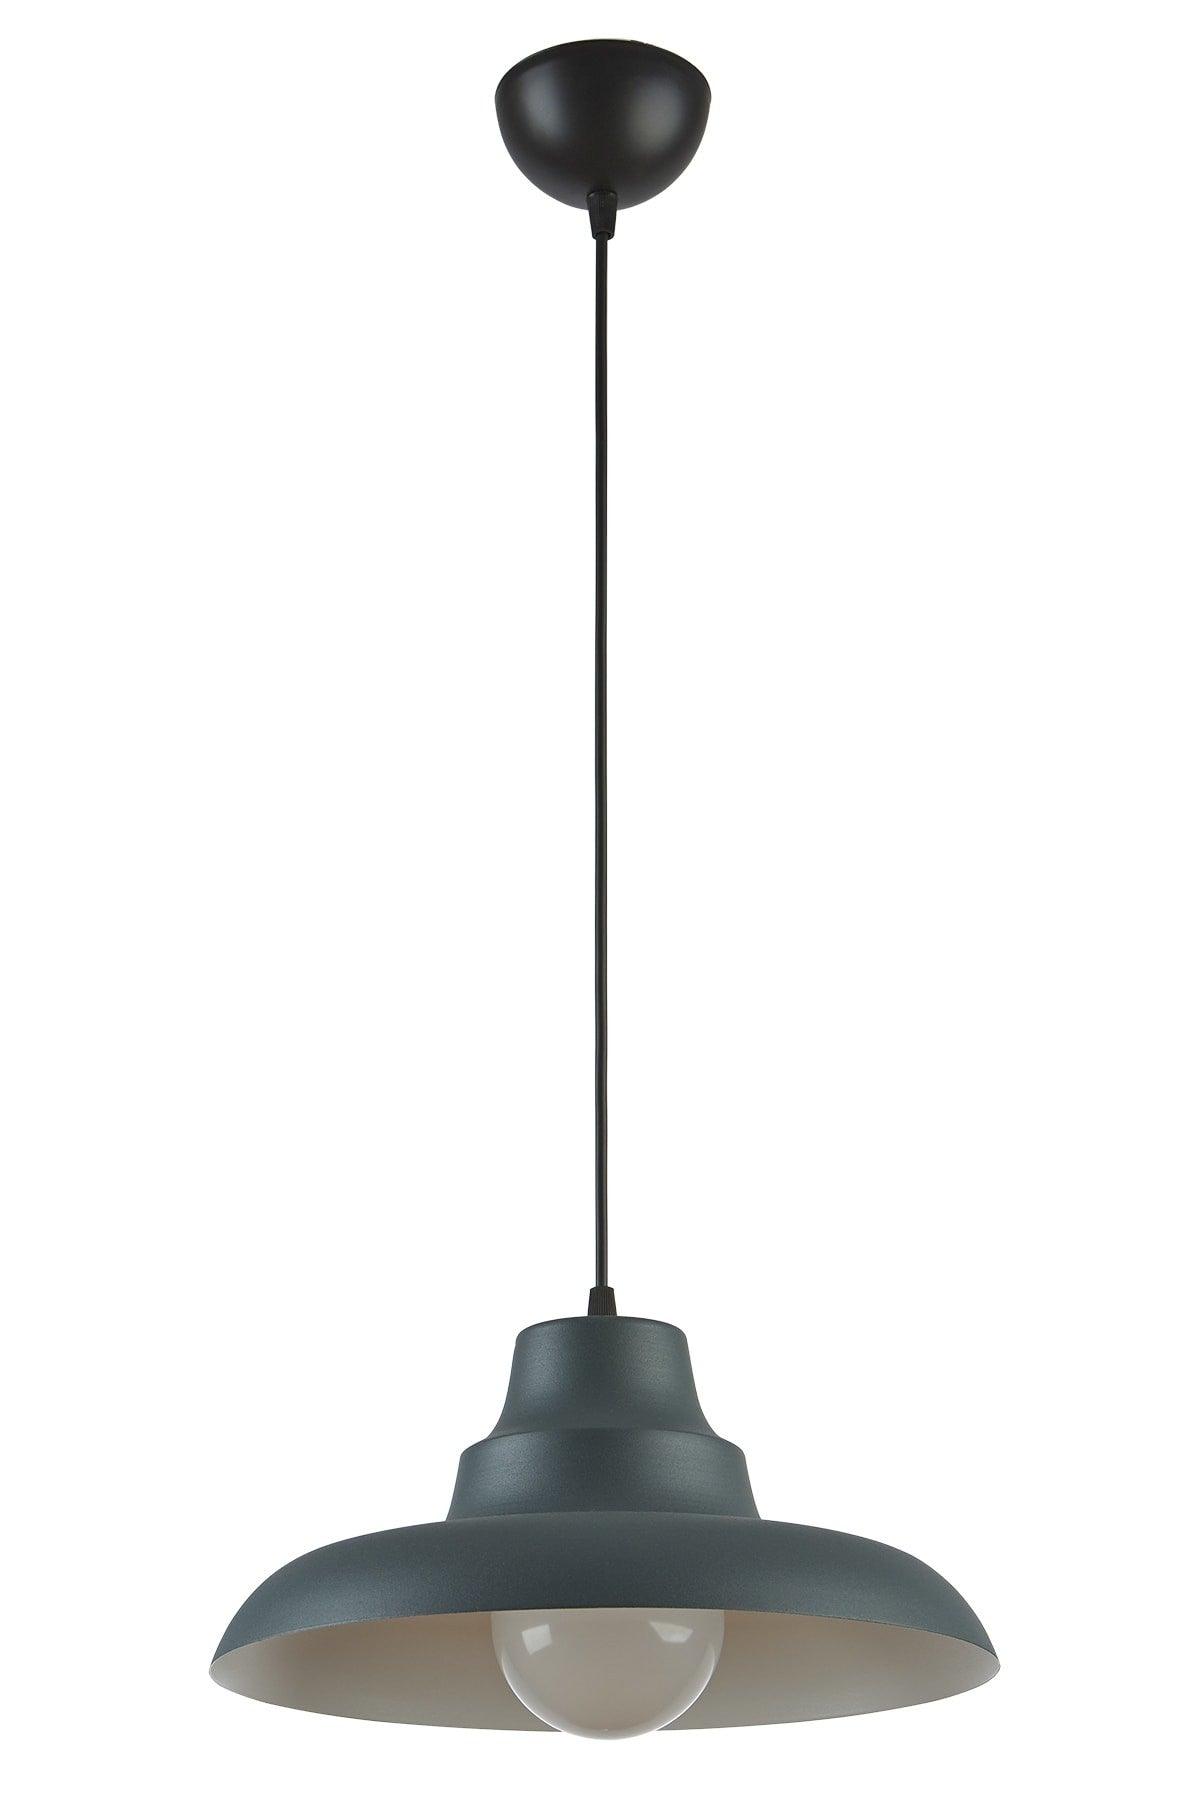 Carmen Special Design (DIA 30 CM)modern Sports Cafe-kitchen White Single Pendant Lamp Chandelier in Anthracite - Swordslife